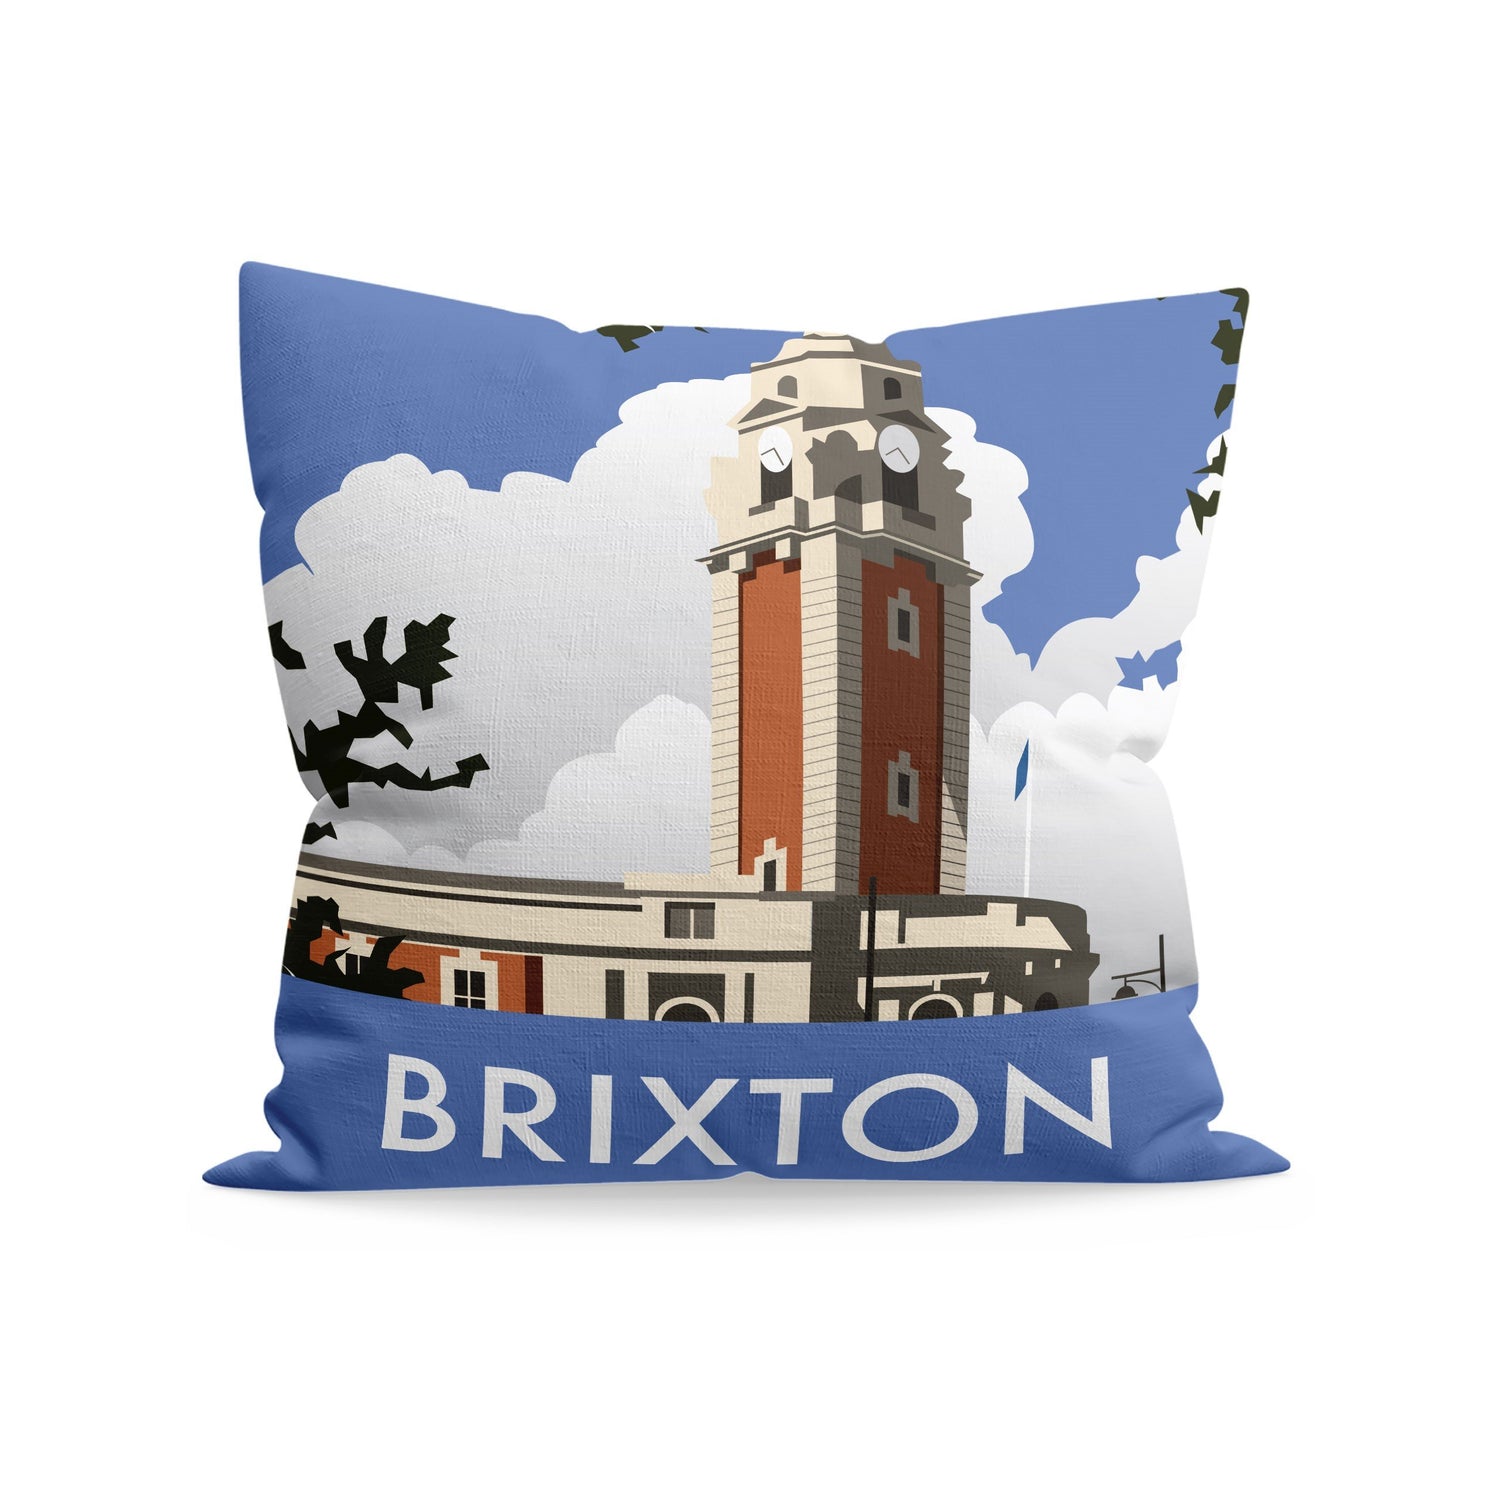 Brixton, London Fibre Filled Cushion